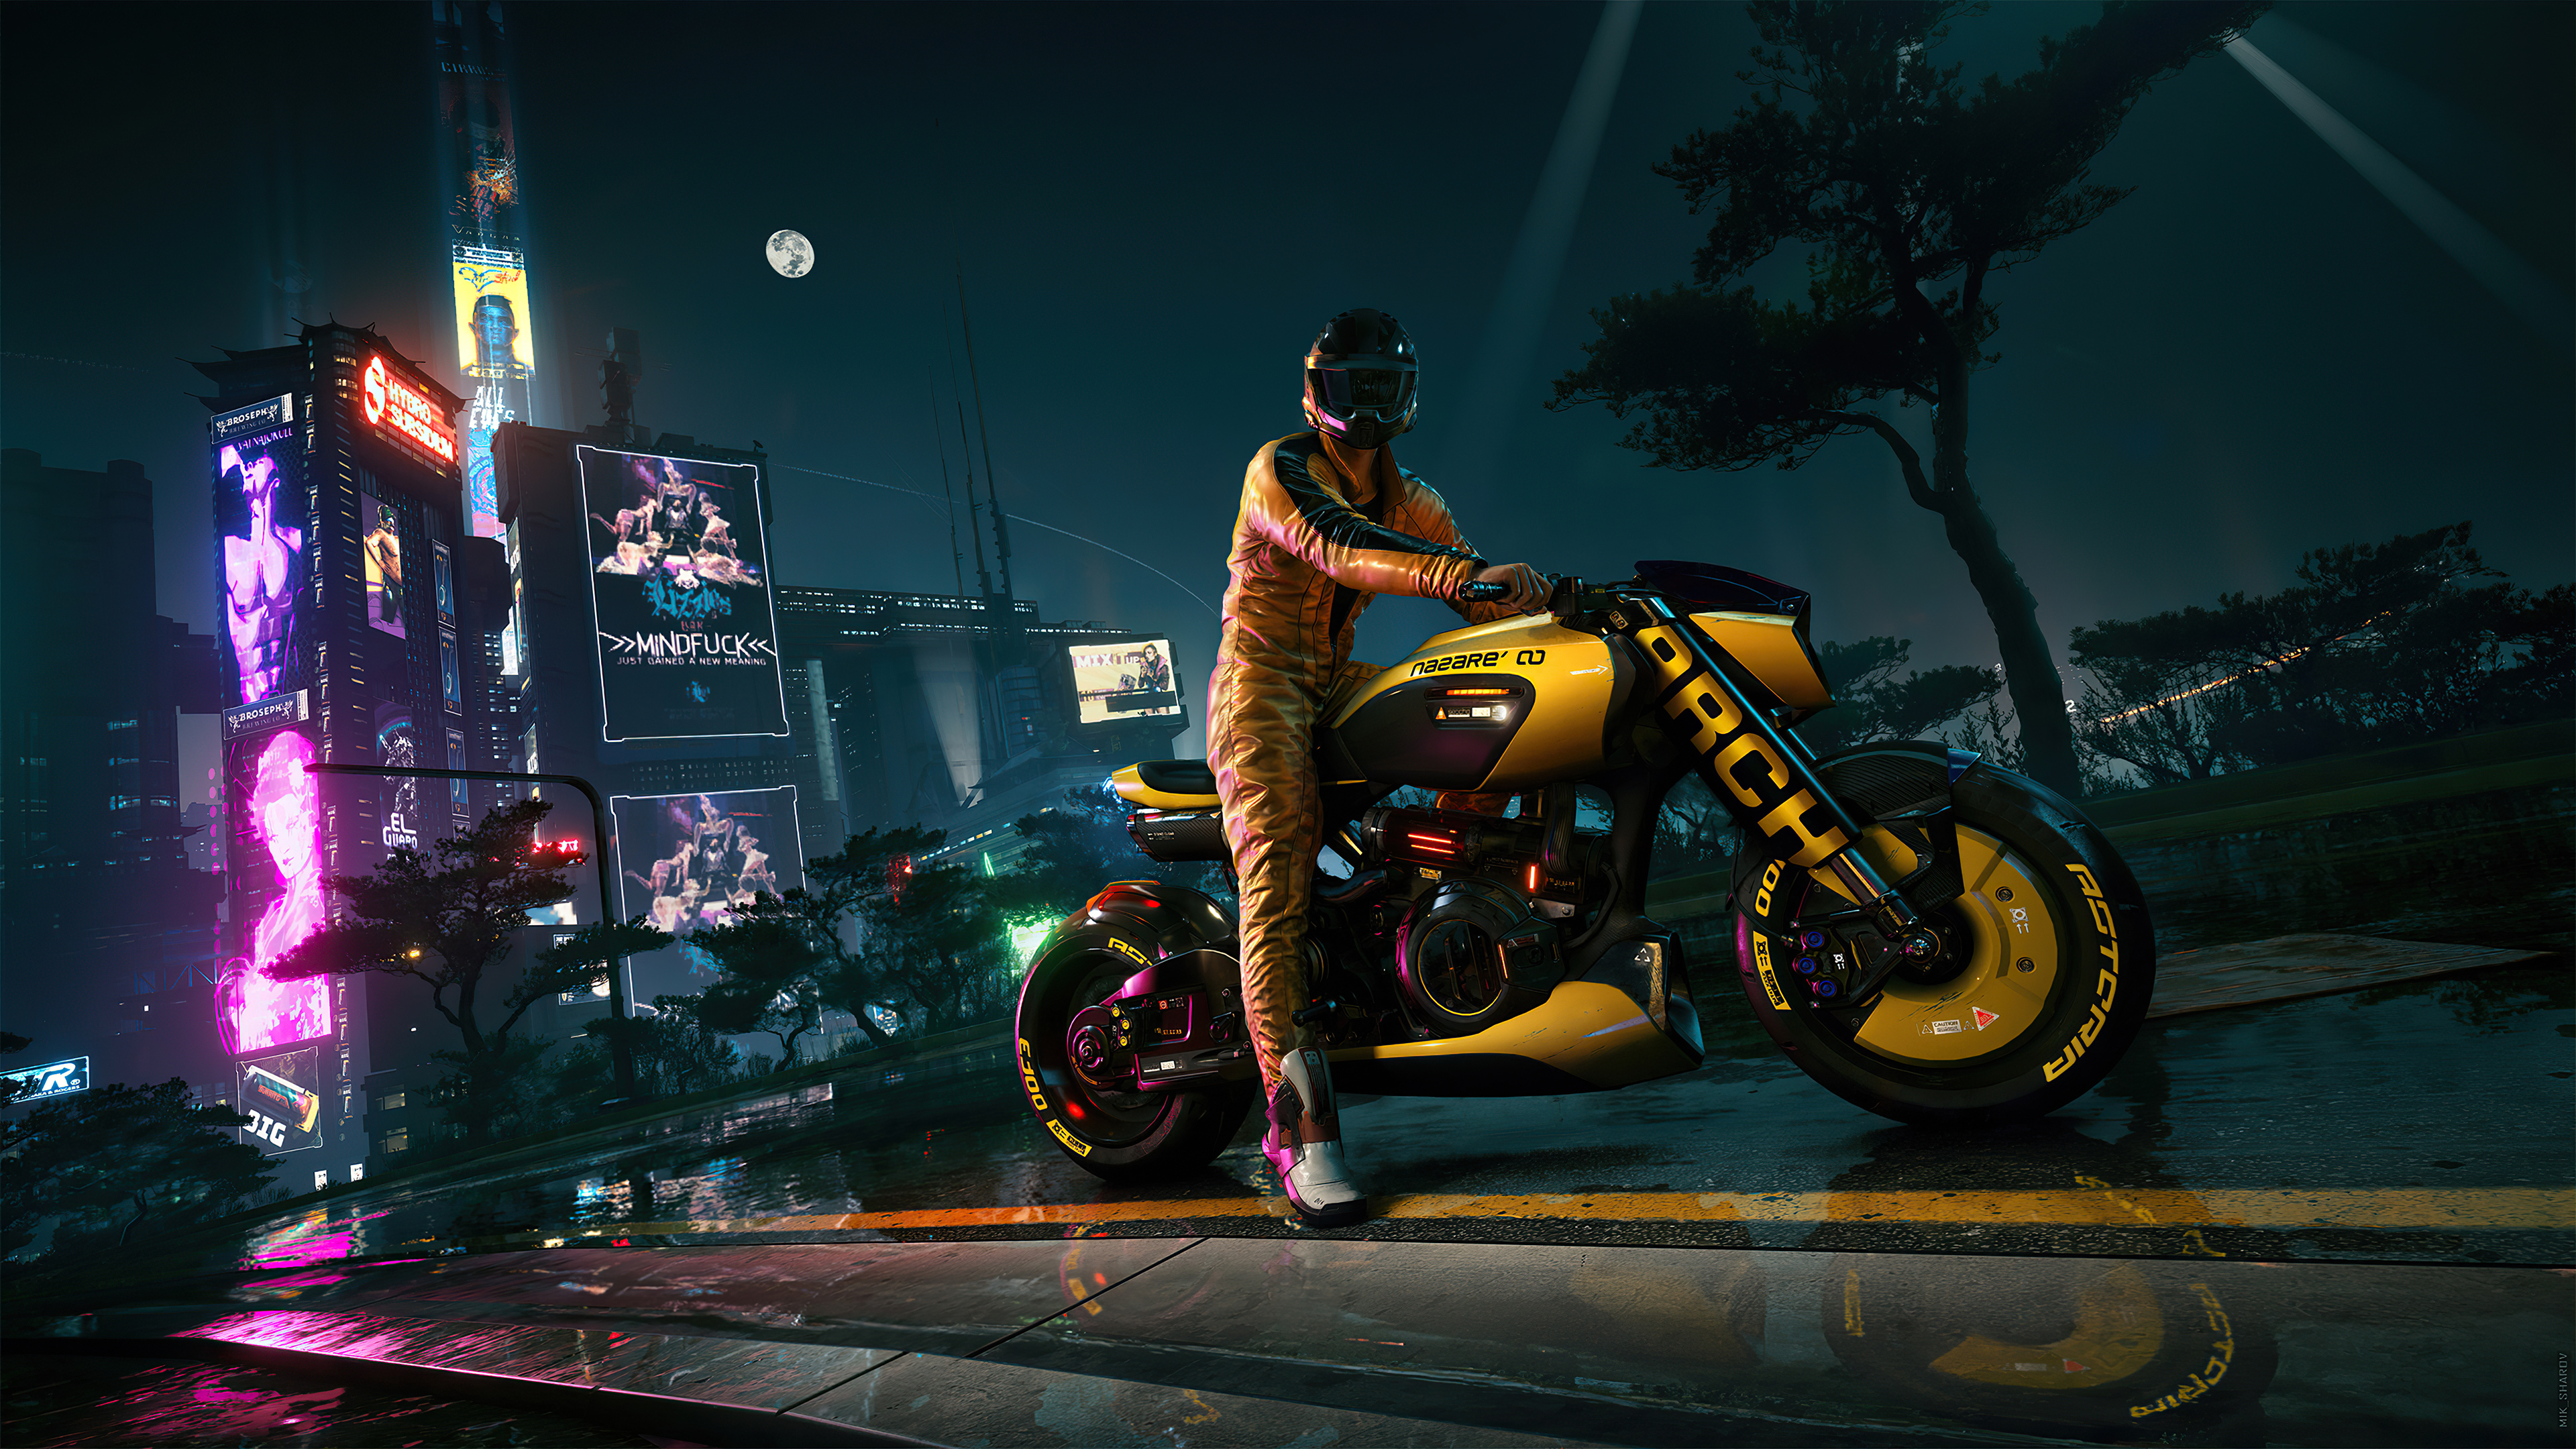 Biker Cyberpunk 2077 Video Games Motorcycle City Night Moon Helmet Reflection Looking At Viewer City 3840x2160